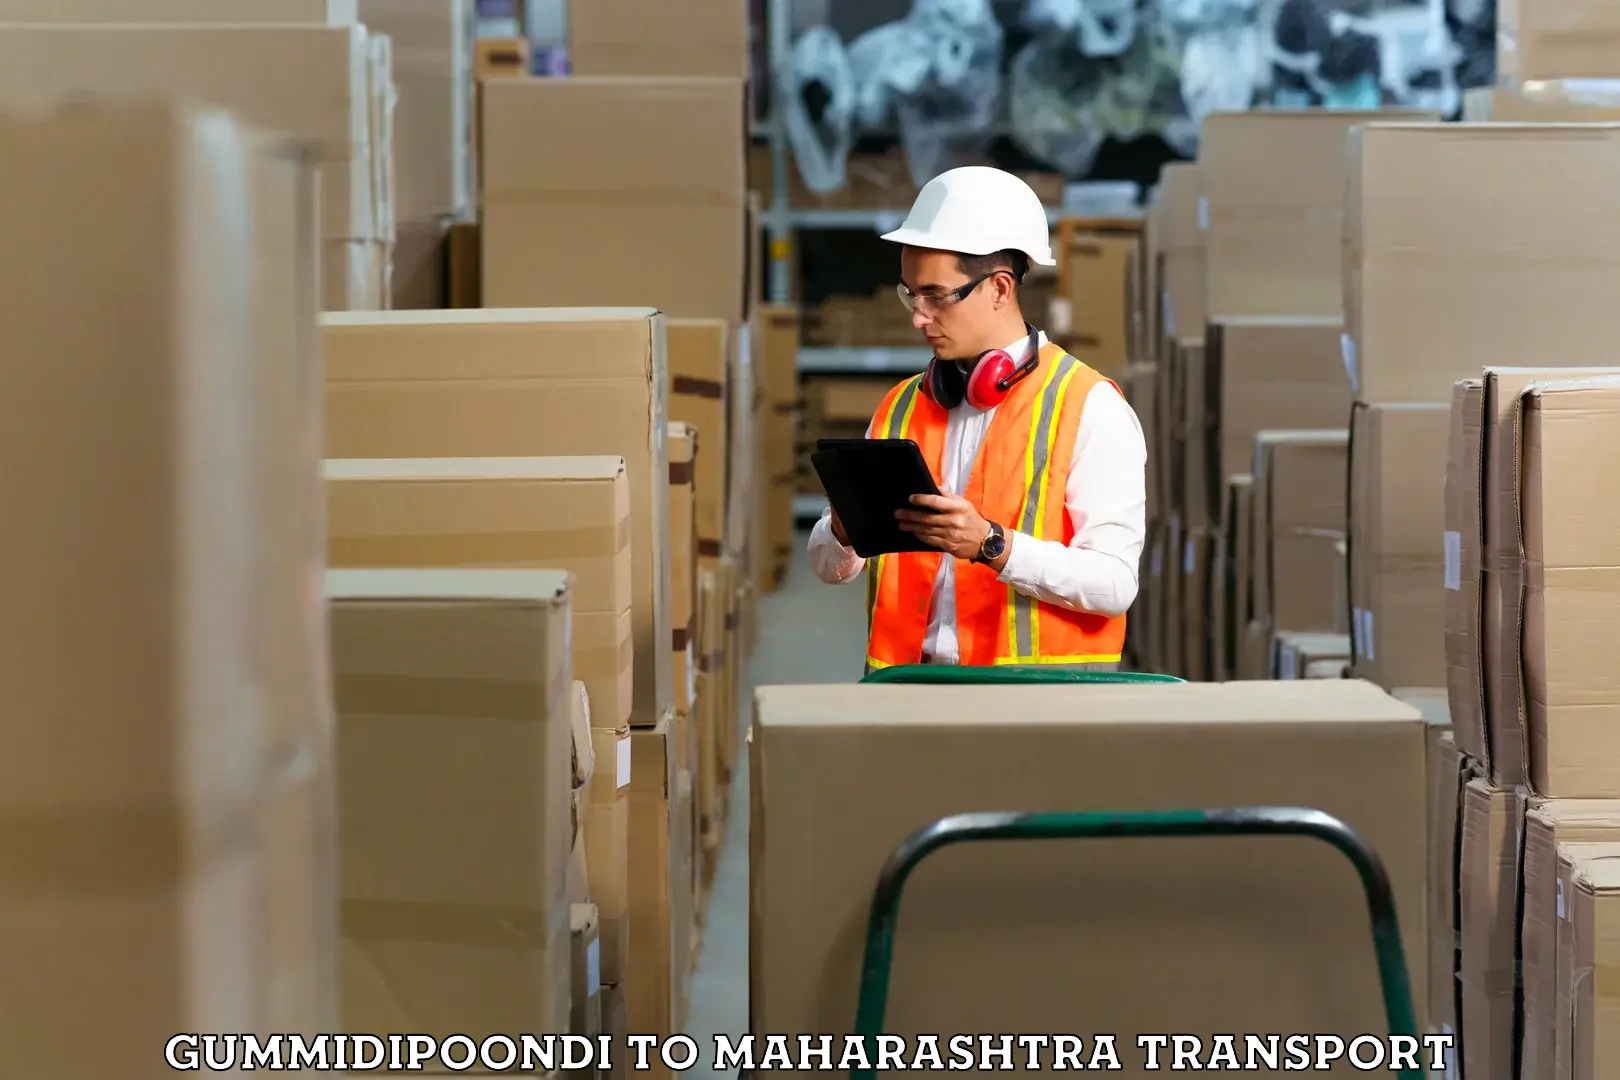 Delivery service Gummidipoondi to Maharashtra